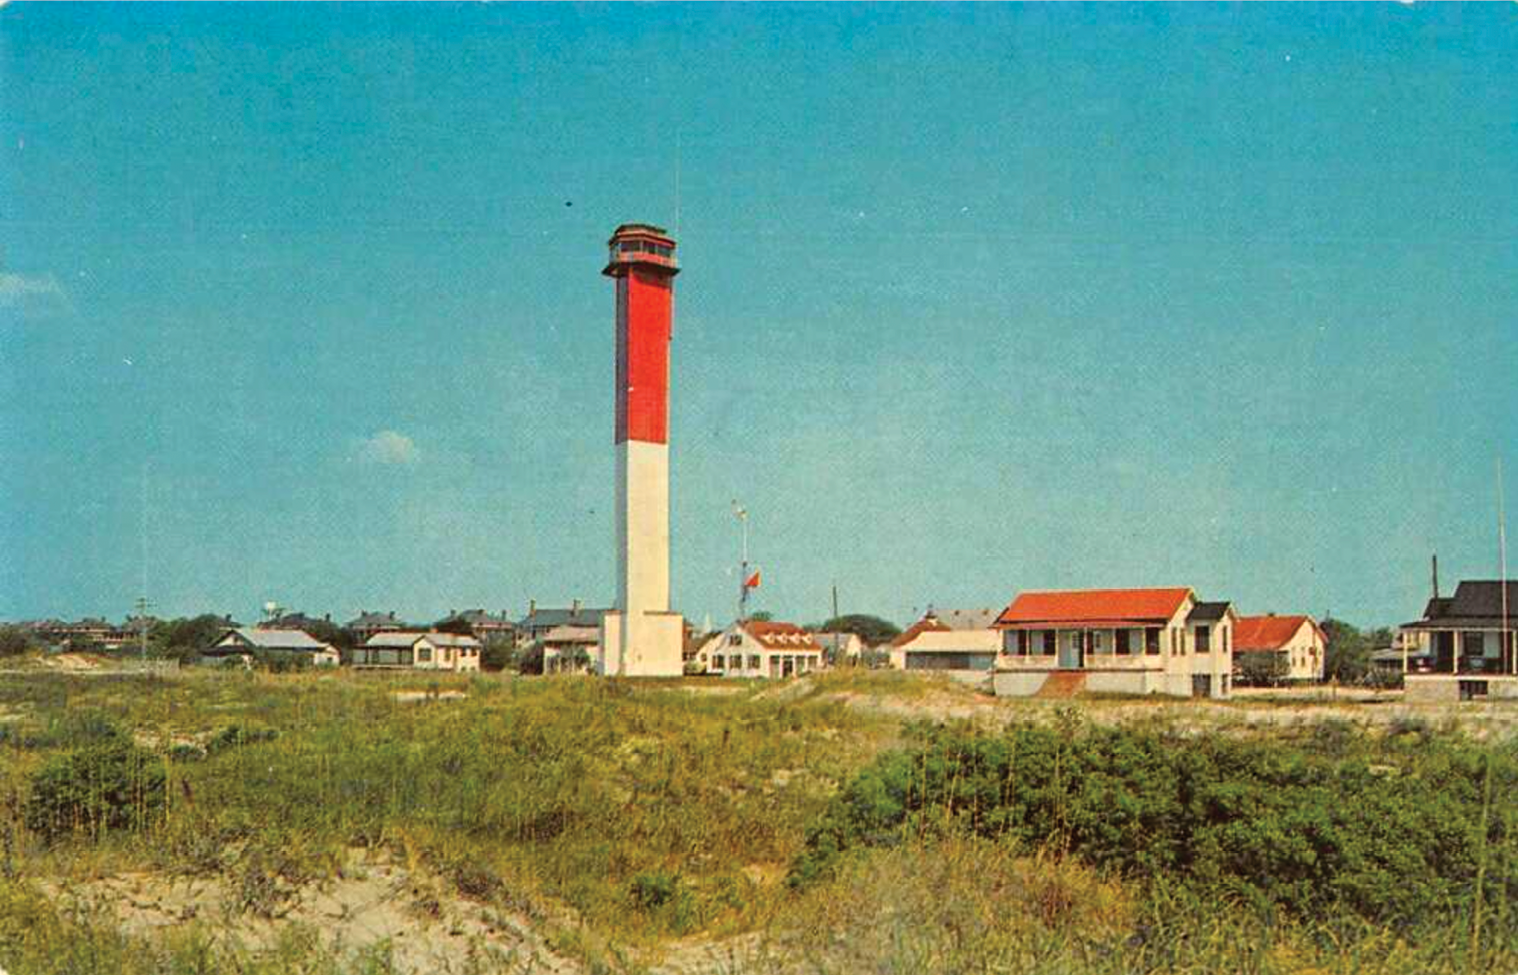 Sullivan’s Island Lighthouse: The Charleston Light was dedicated on June 15, 1962.